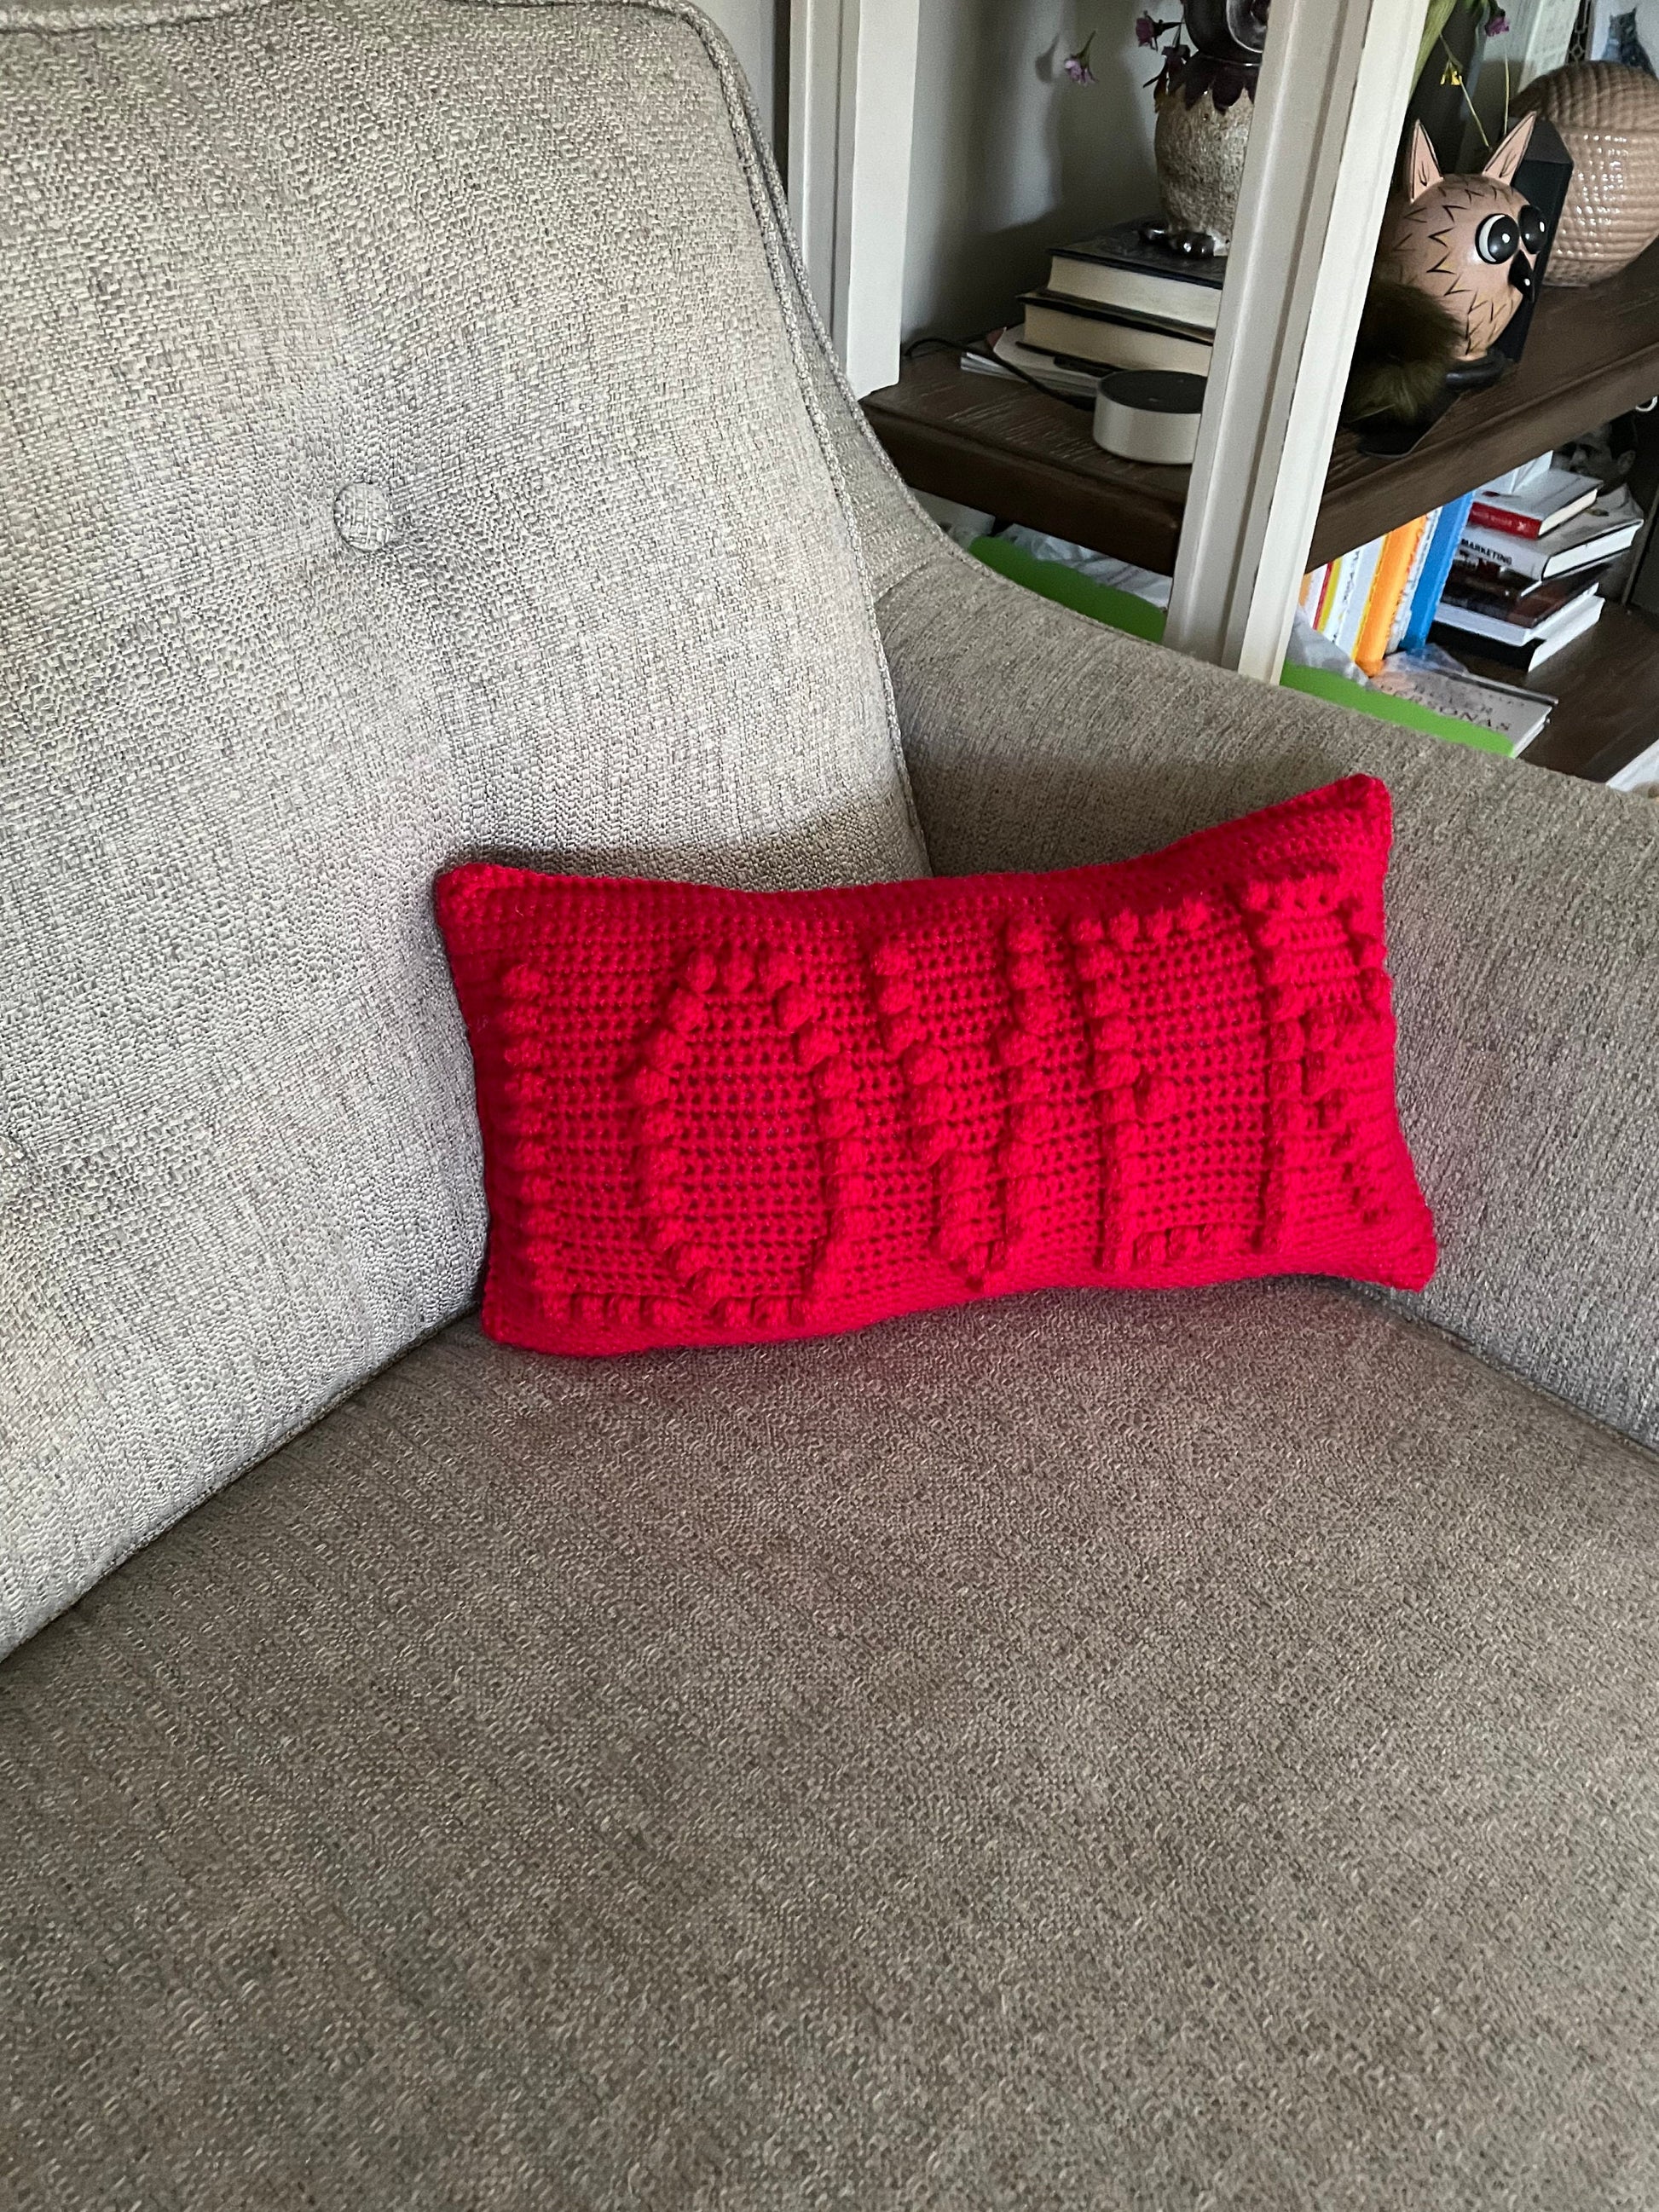 CROCHET PATTERN- Lover Pillow Pattern, Valentines Pillow Pattern